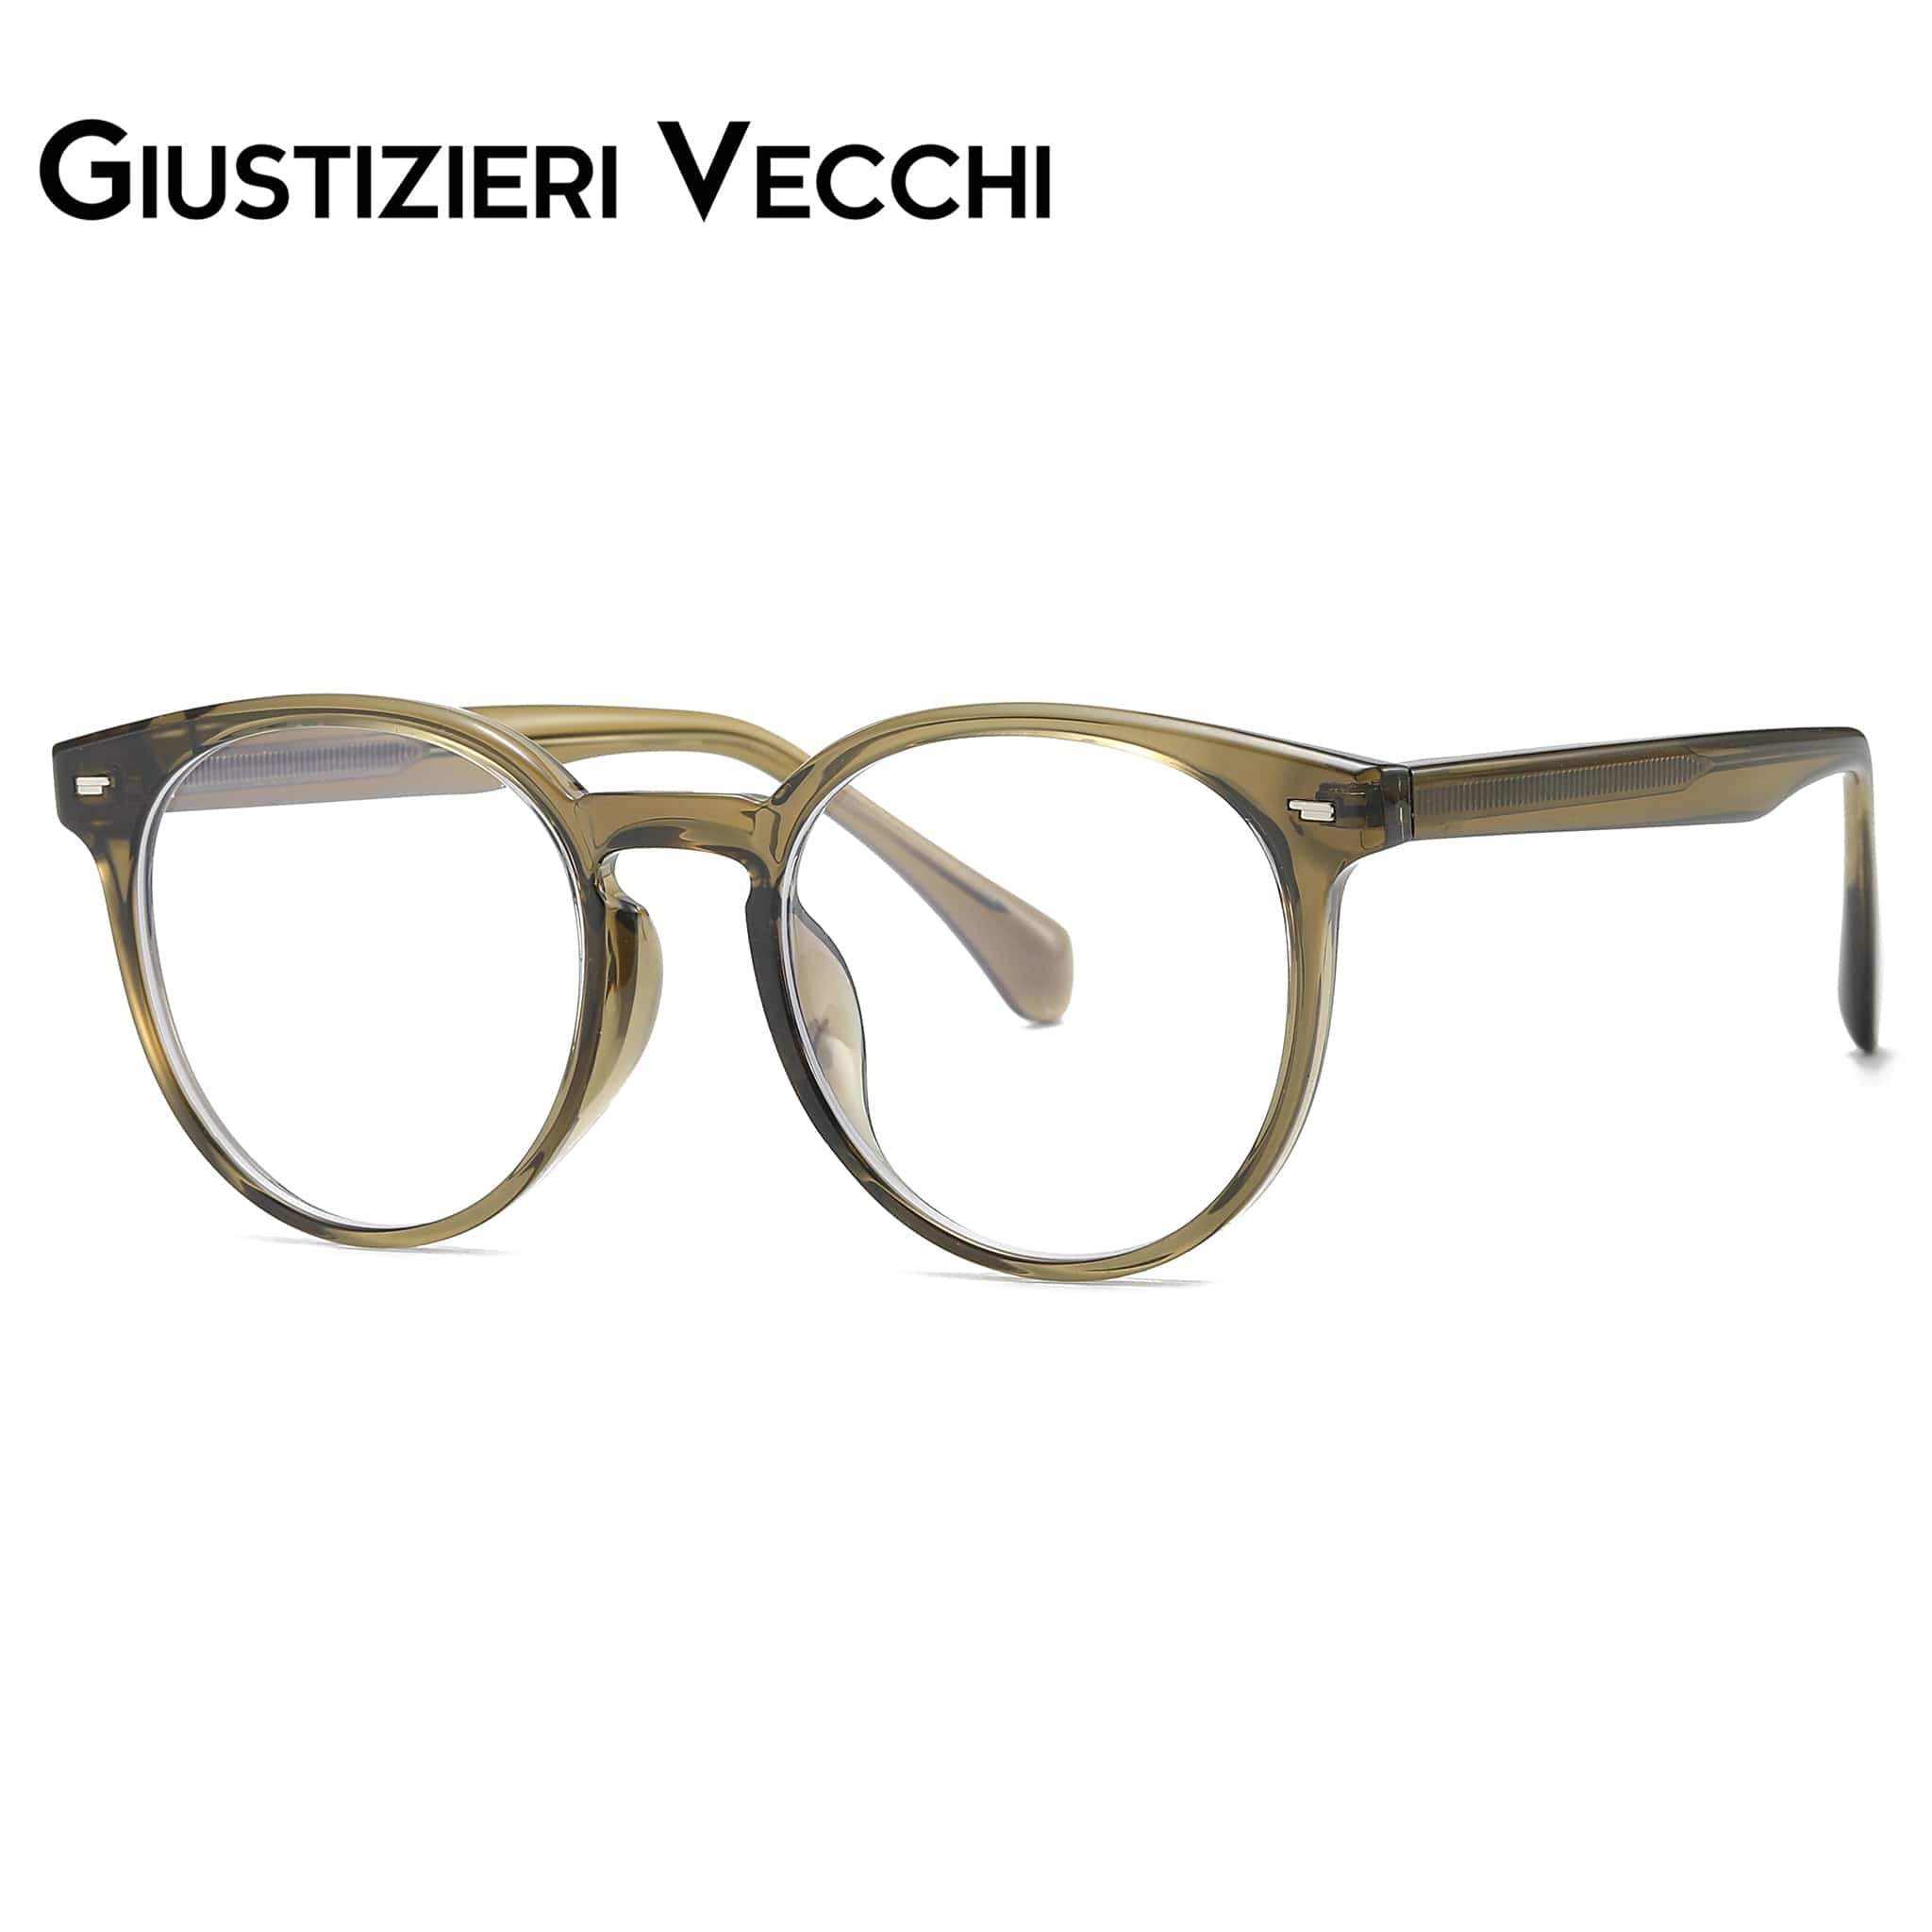 GIUSTIZIERI VECCHI Eyeglasses NeonBloom Duo